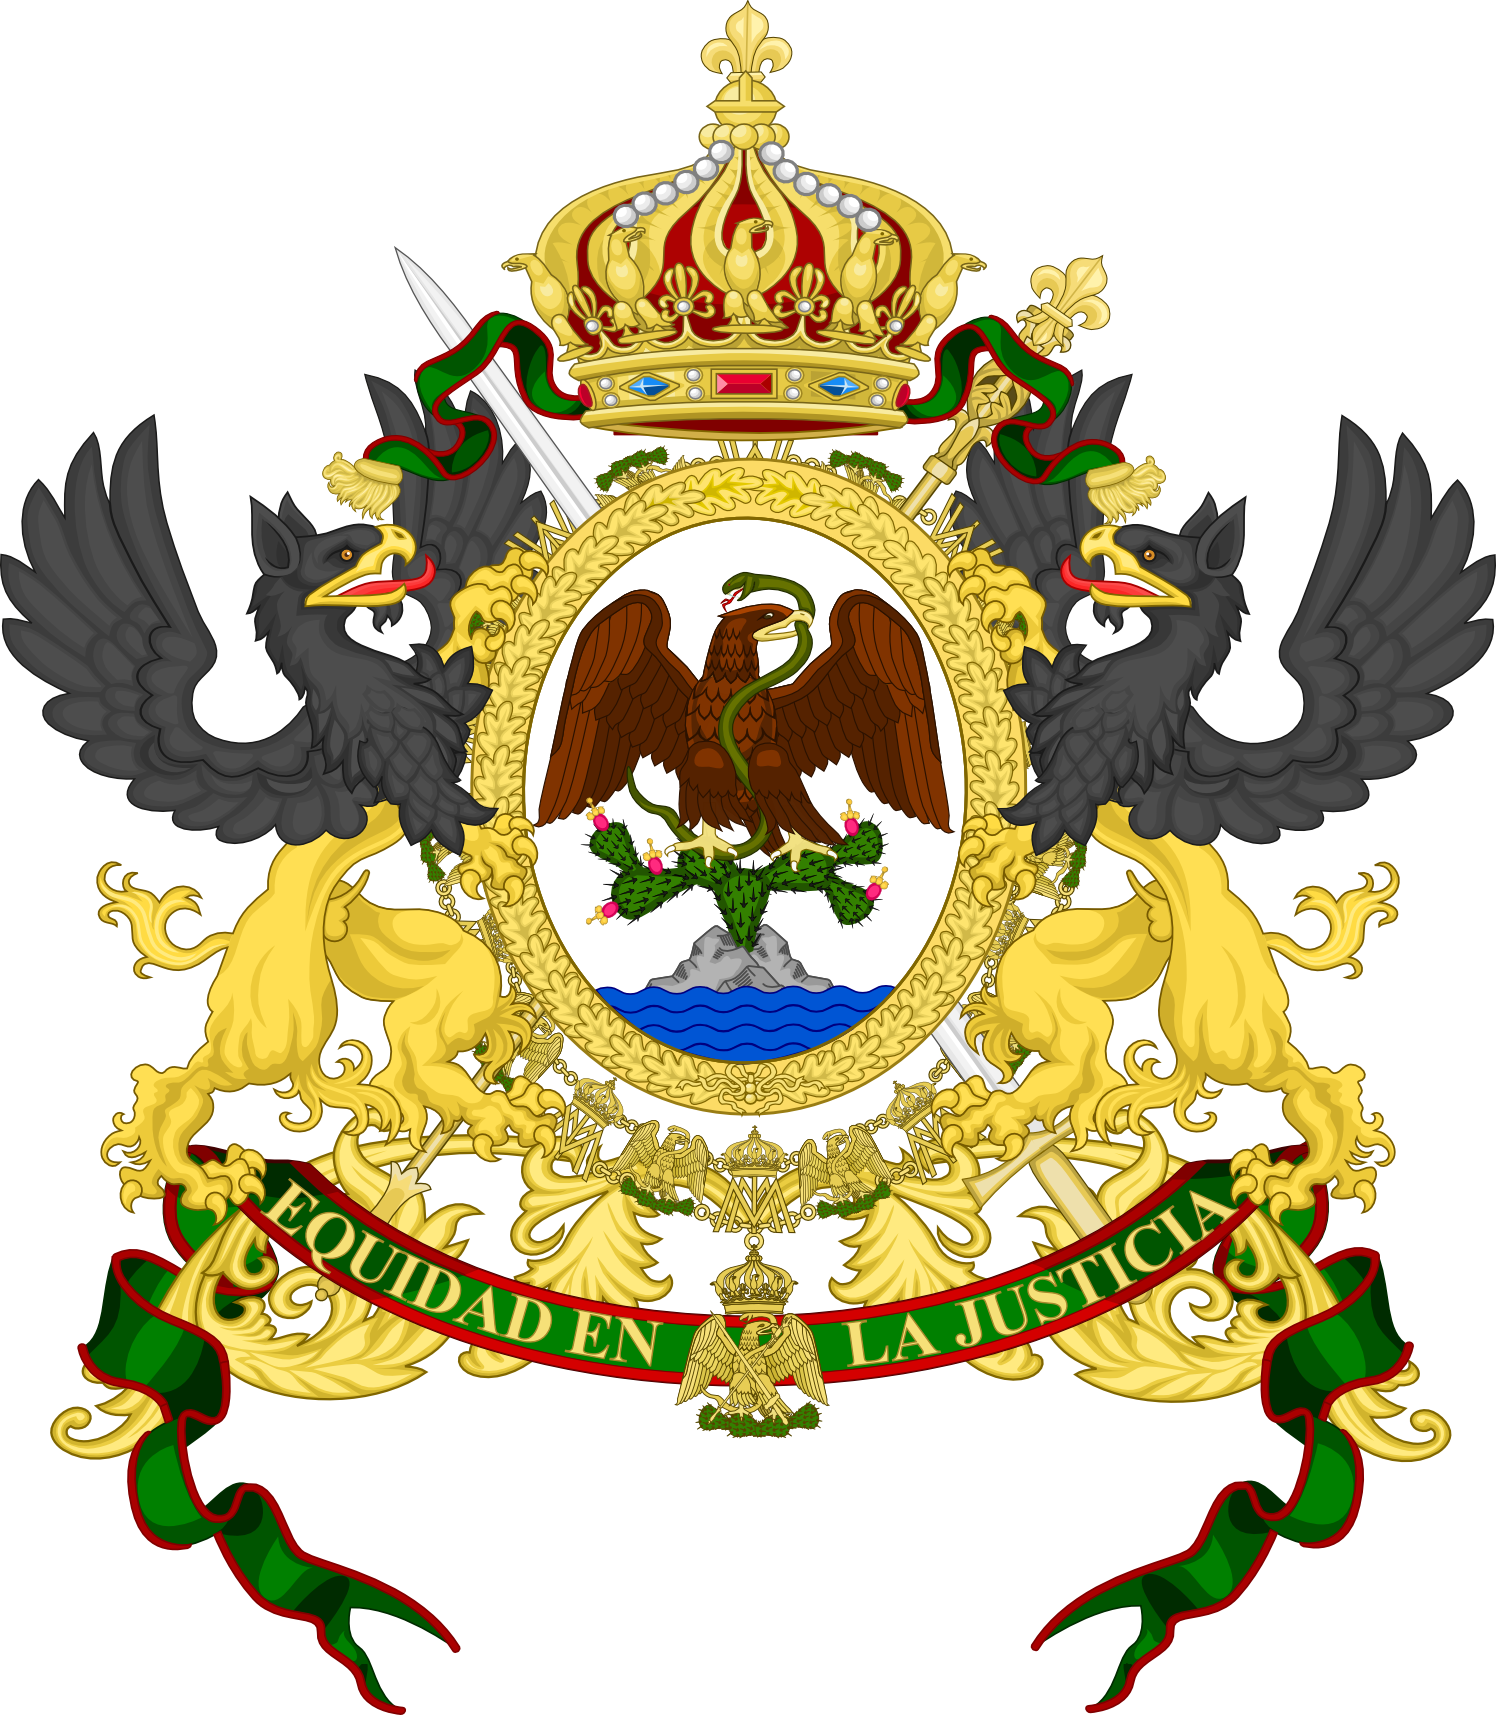 Download El Verdadero Escudo Nacional De Mexico Atl Tlachinolli Flag Second Mexican Empire Png Image With No Background Pngkey Com